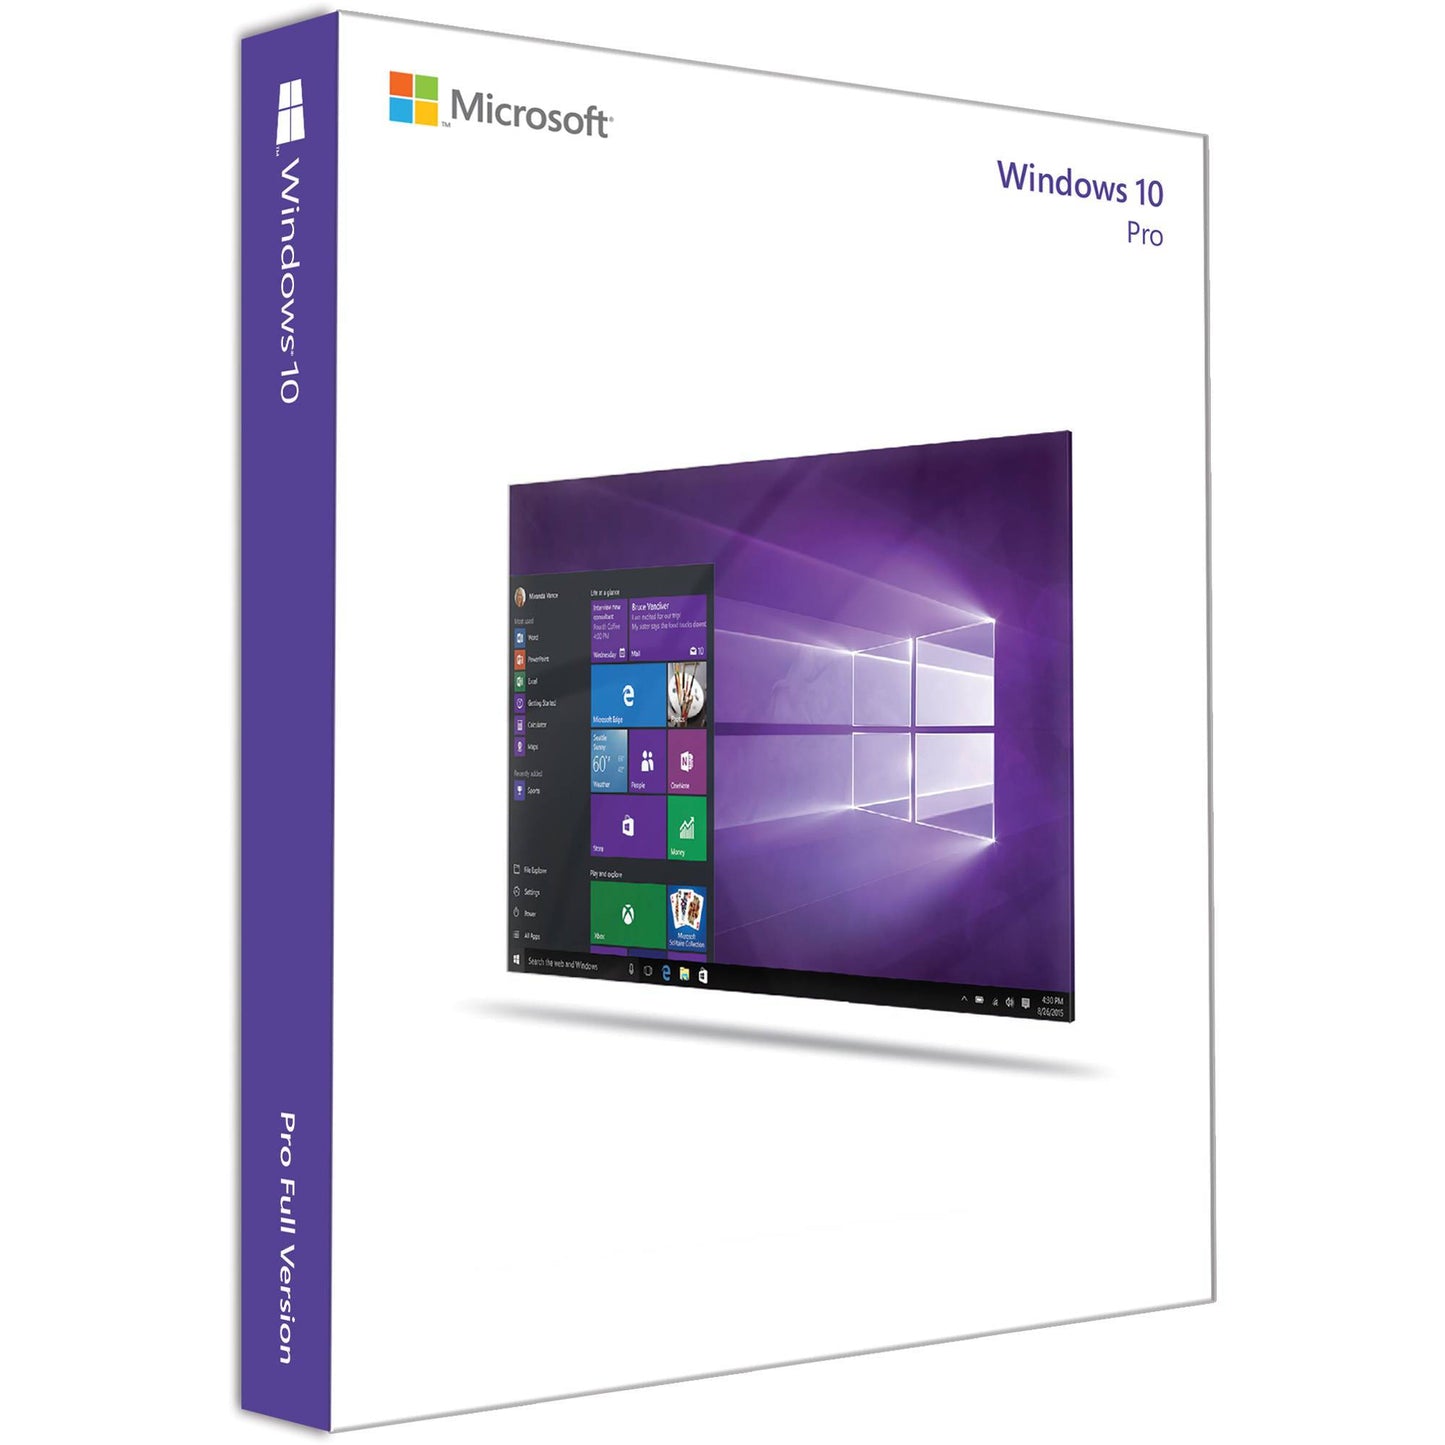 Microsoft Windows 10 Pro 32/64-bit | Transferable License Key for 1 PC | Digital Download | Australian Stock - INFINITE-ITECH